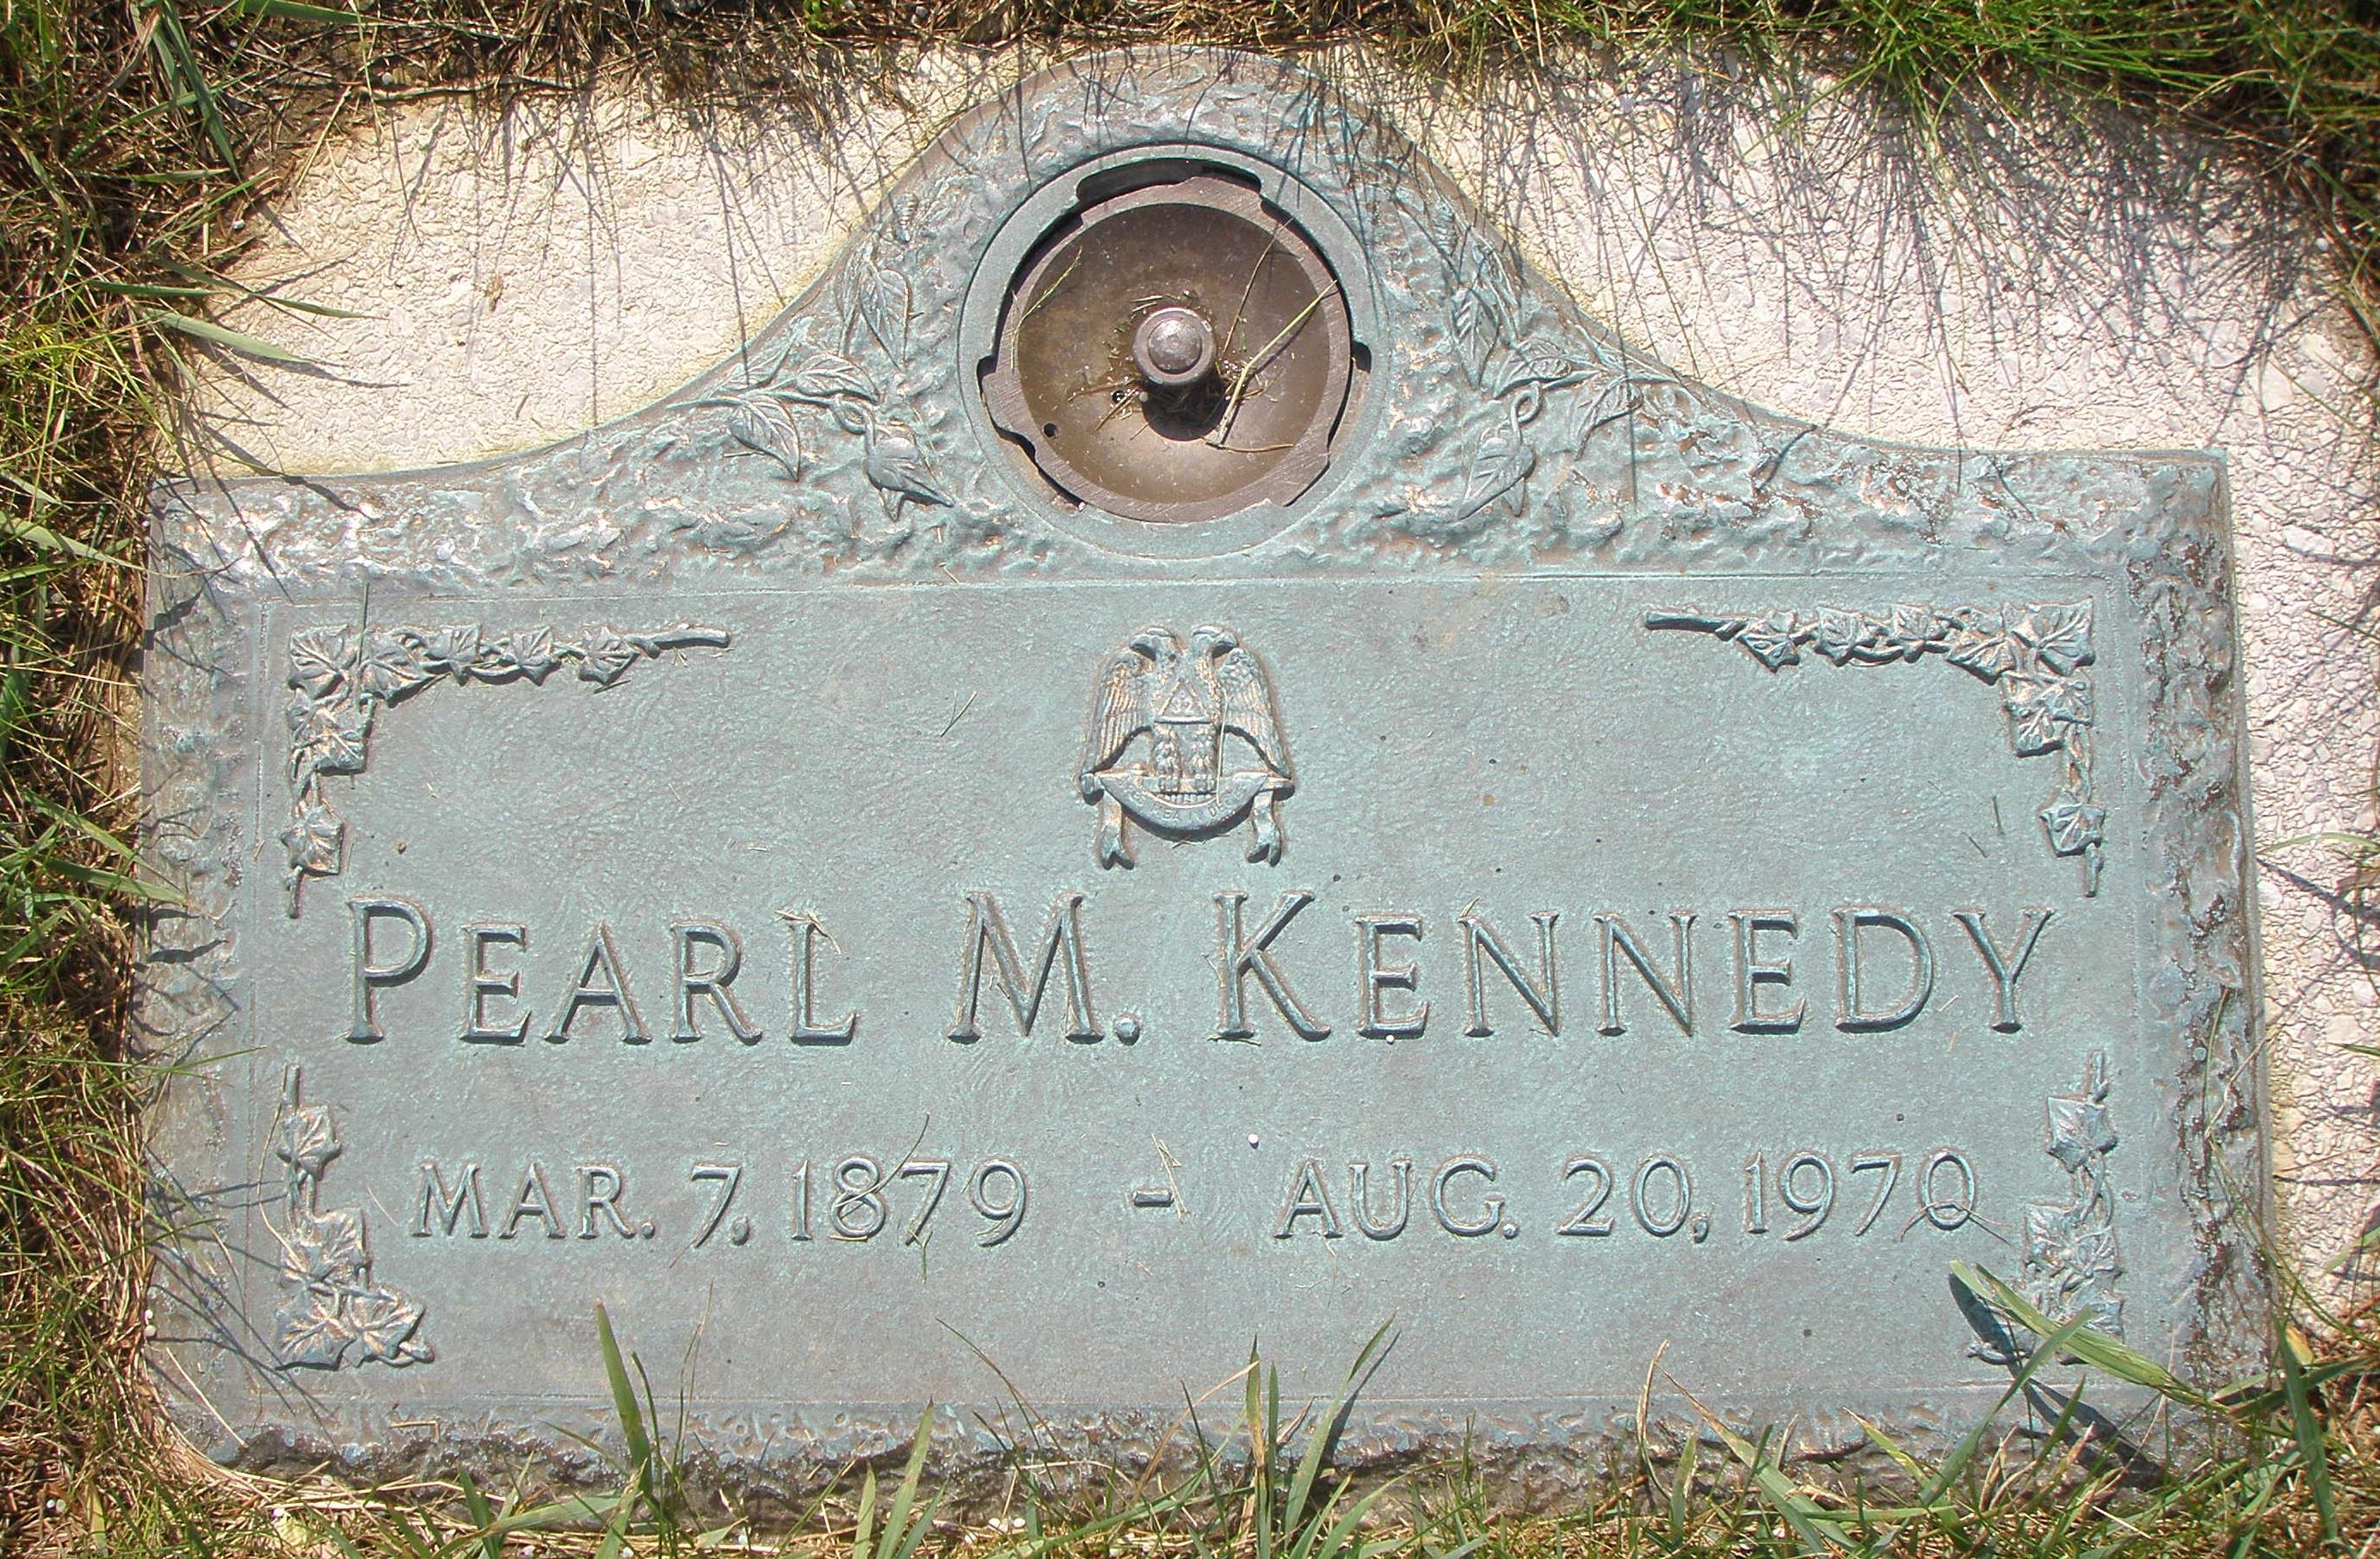 Pearl Minter Kennedy gravesite